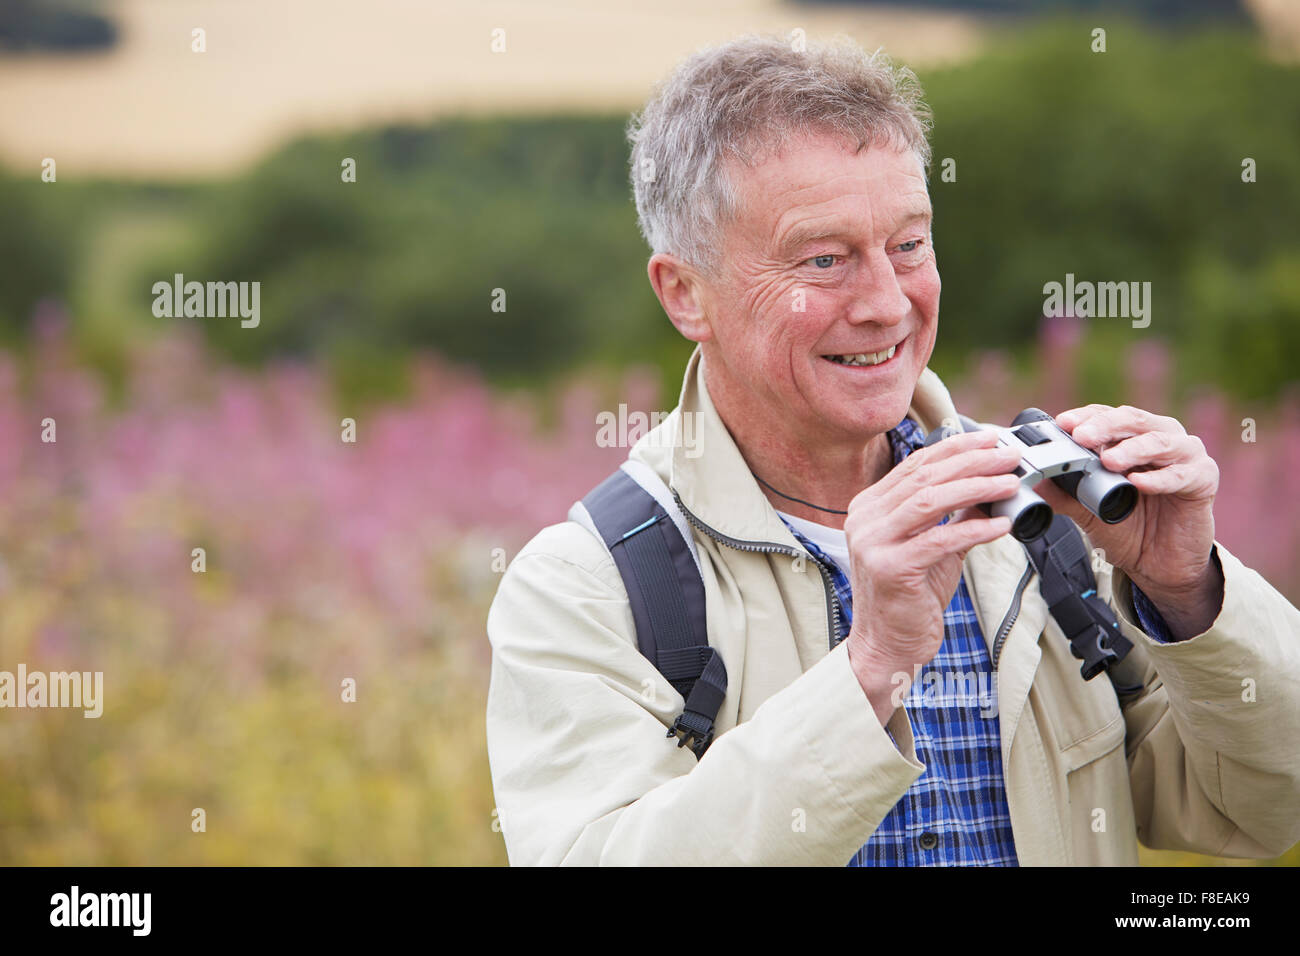 Senior Man On Walk With Binoculars Stock Photo